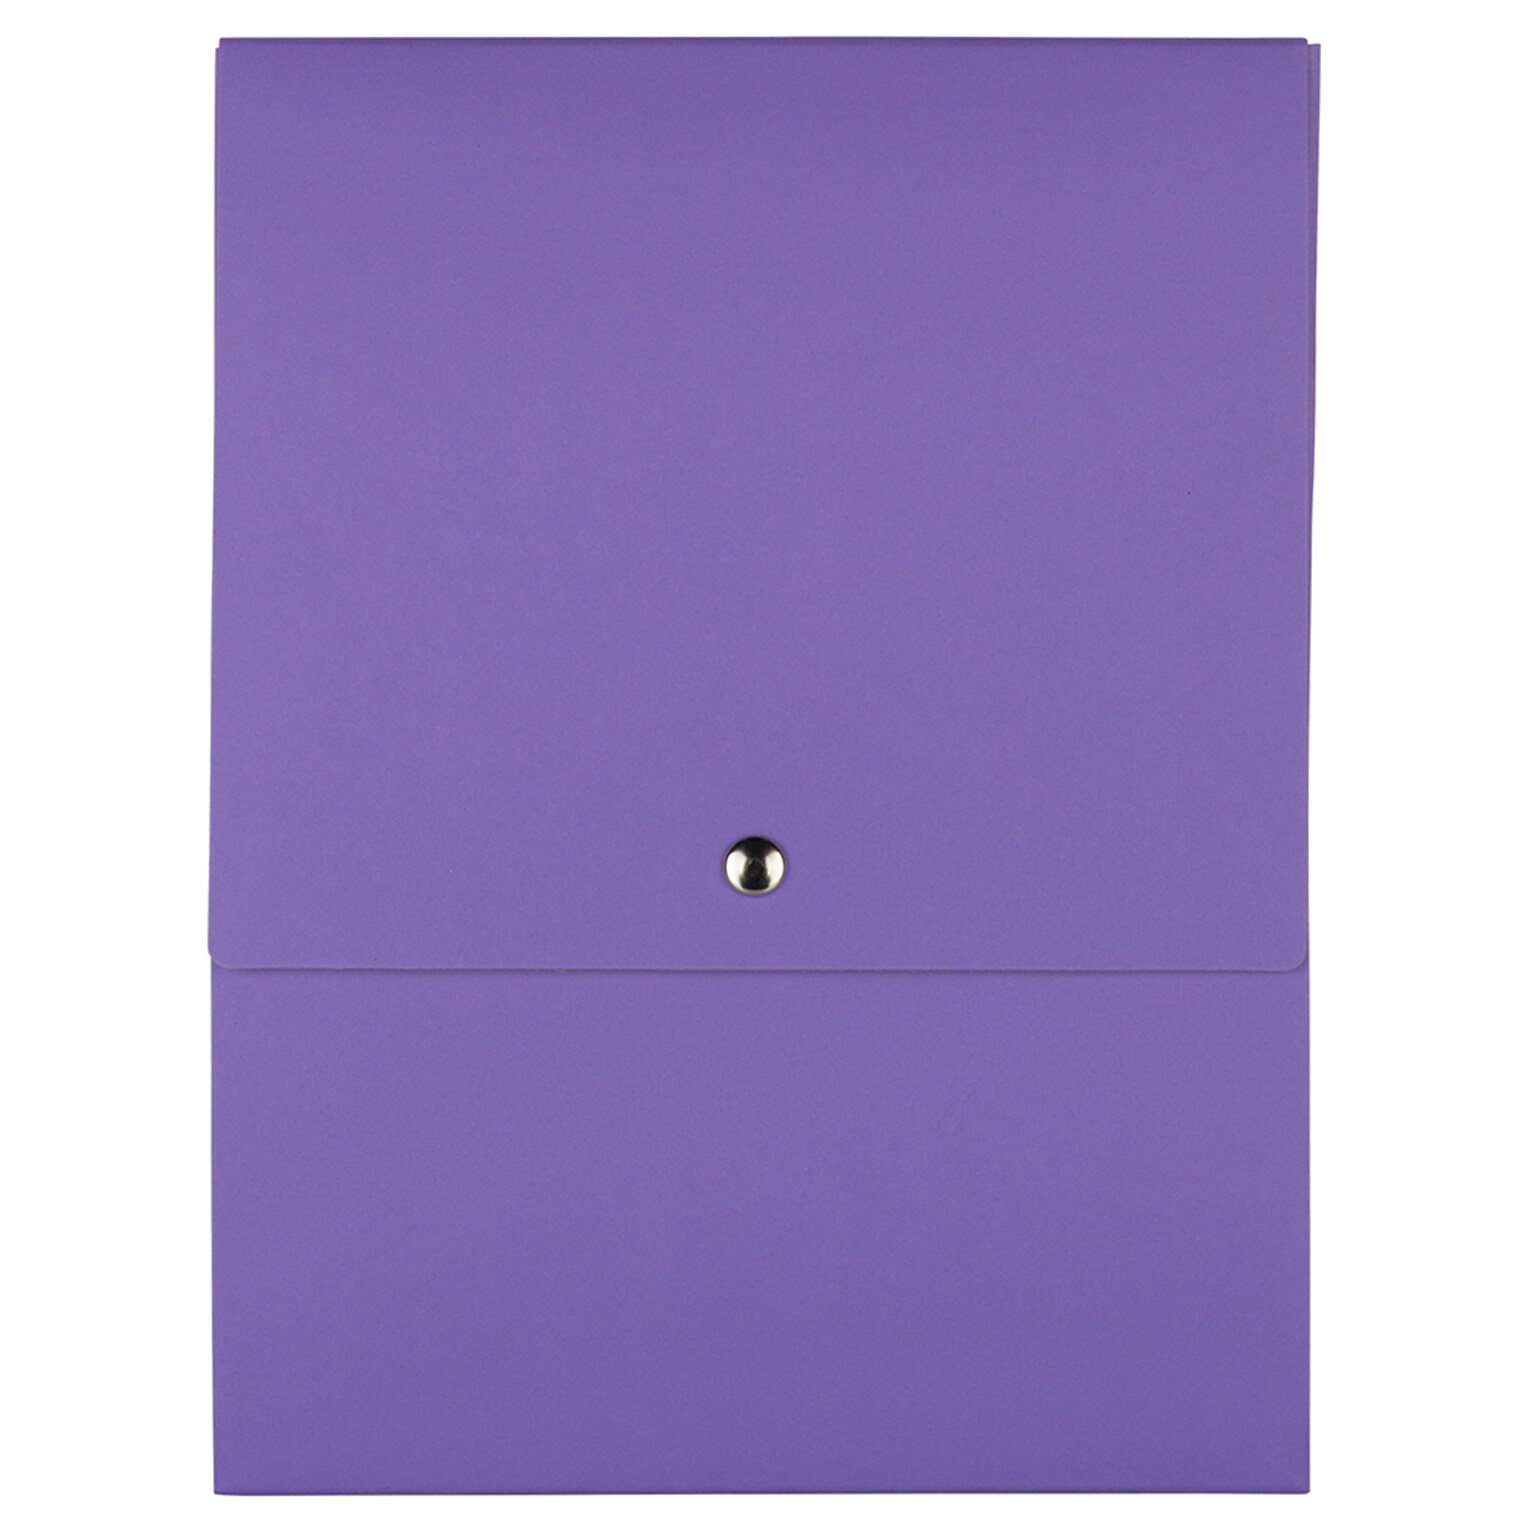 JAM PAPER Vertical Snap Closure Portfolio, 12 1/8 x 9 x 1/2, Purple Kraft (90335342)